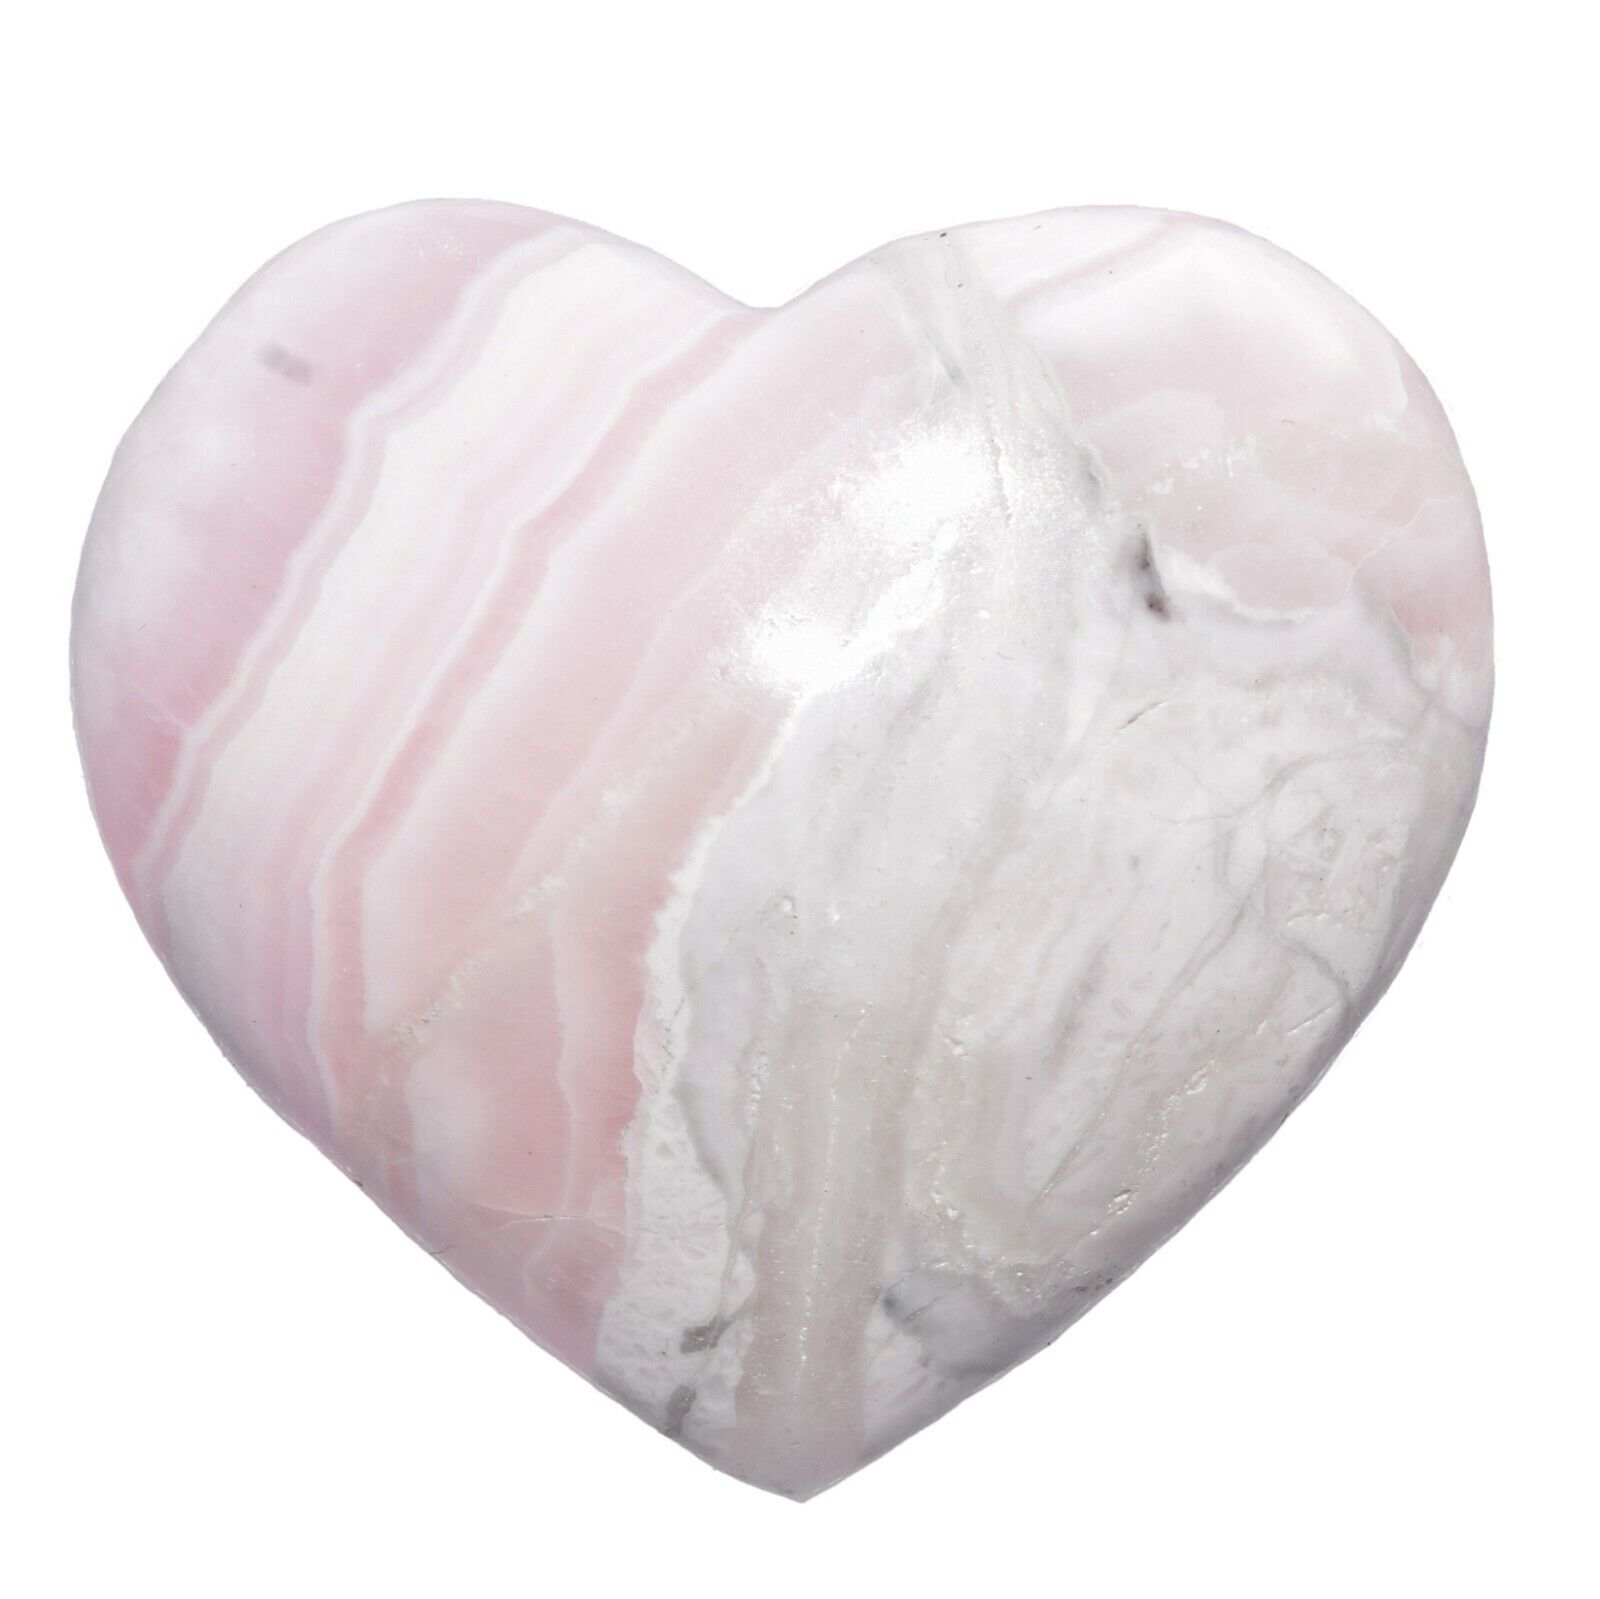 Charged Fluorescent Pink Mangano Calcite Crystal Puffy Heart / Palm Stone PERU